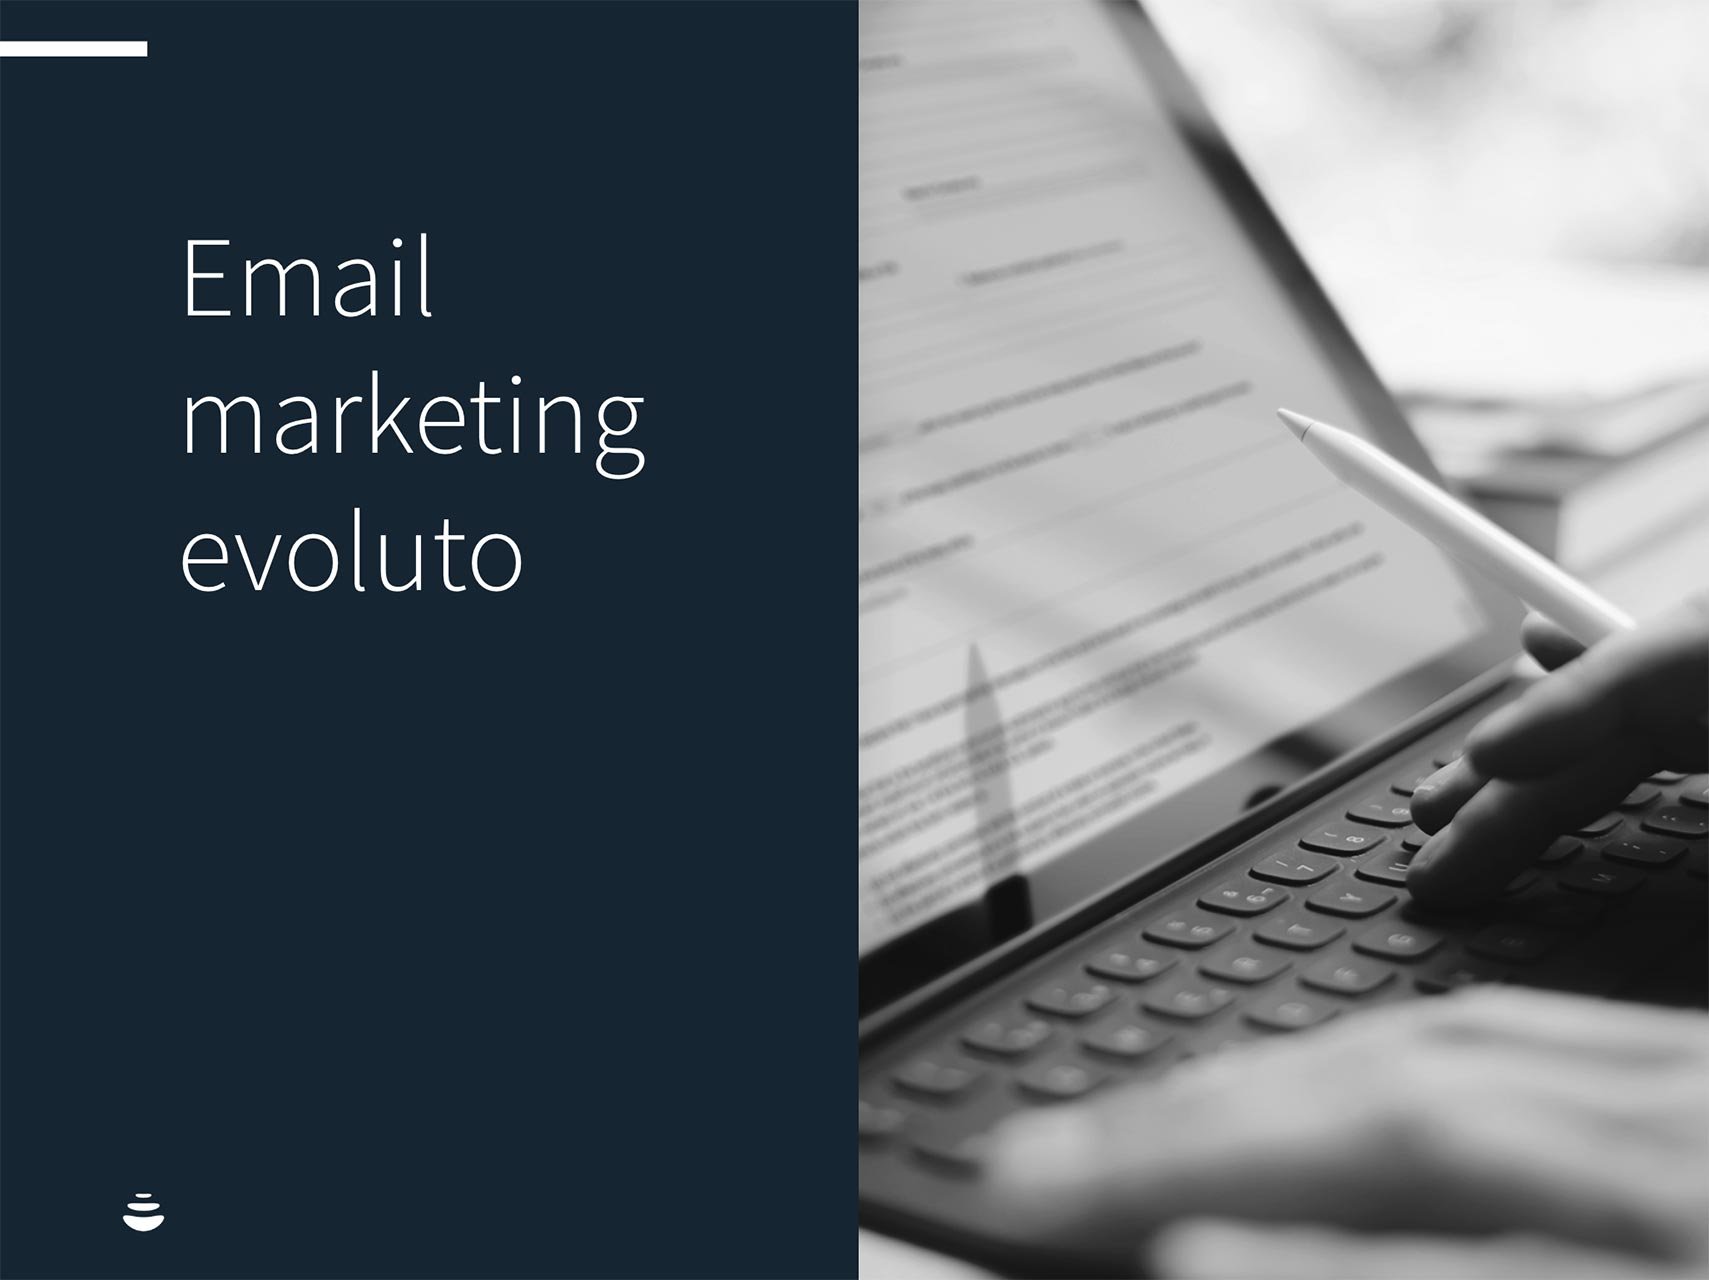 marketing trend 2019 2020, email marketing evoluto